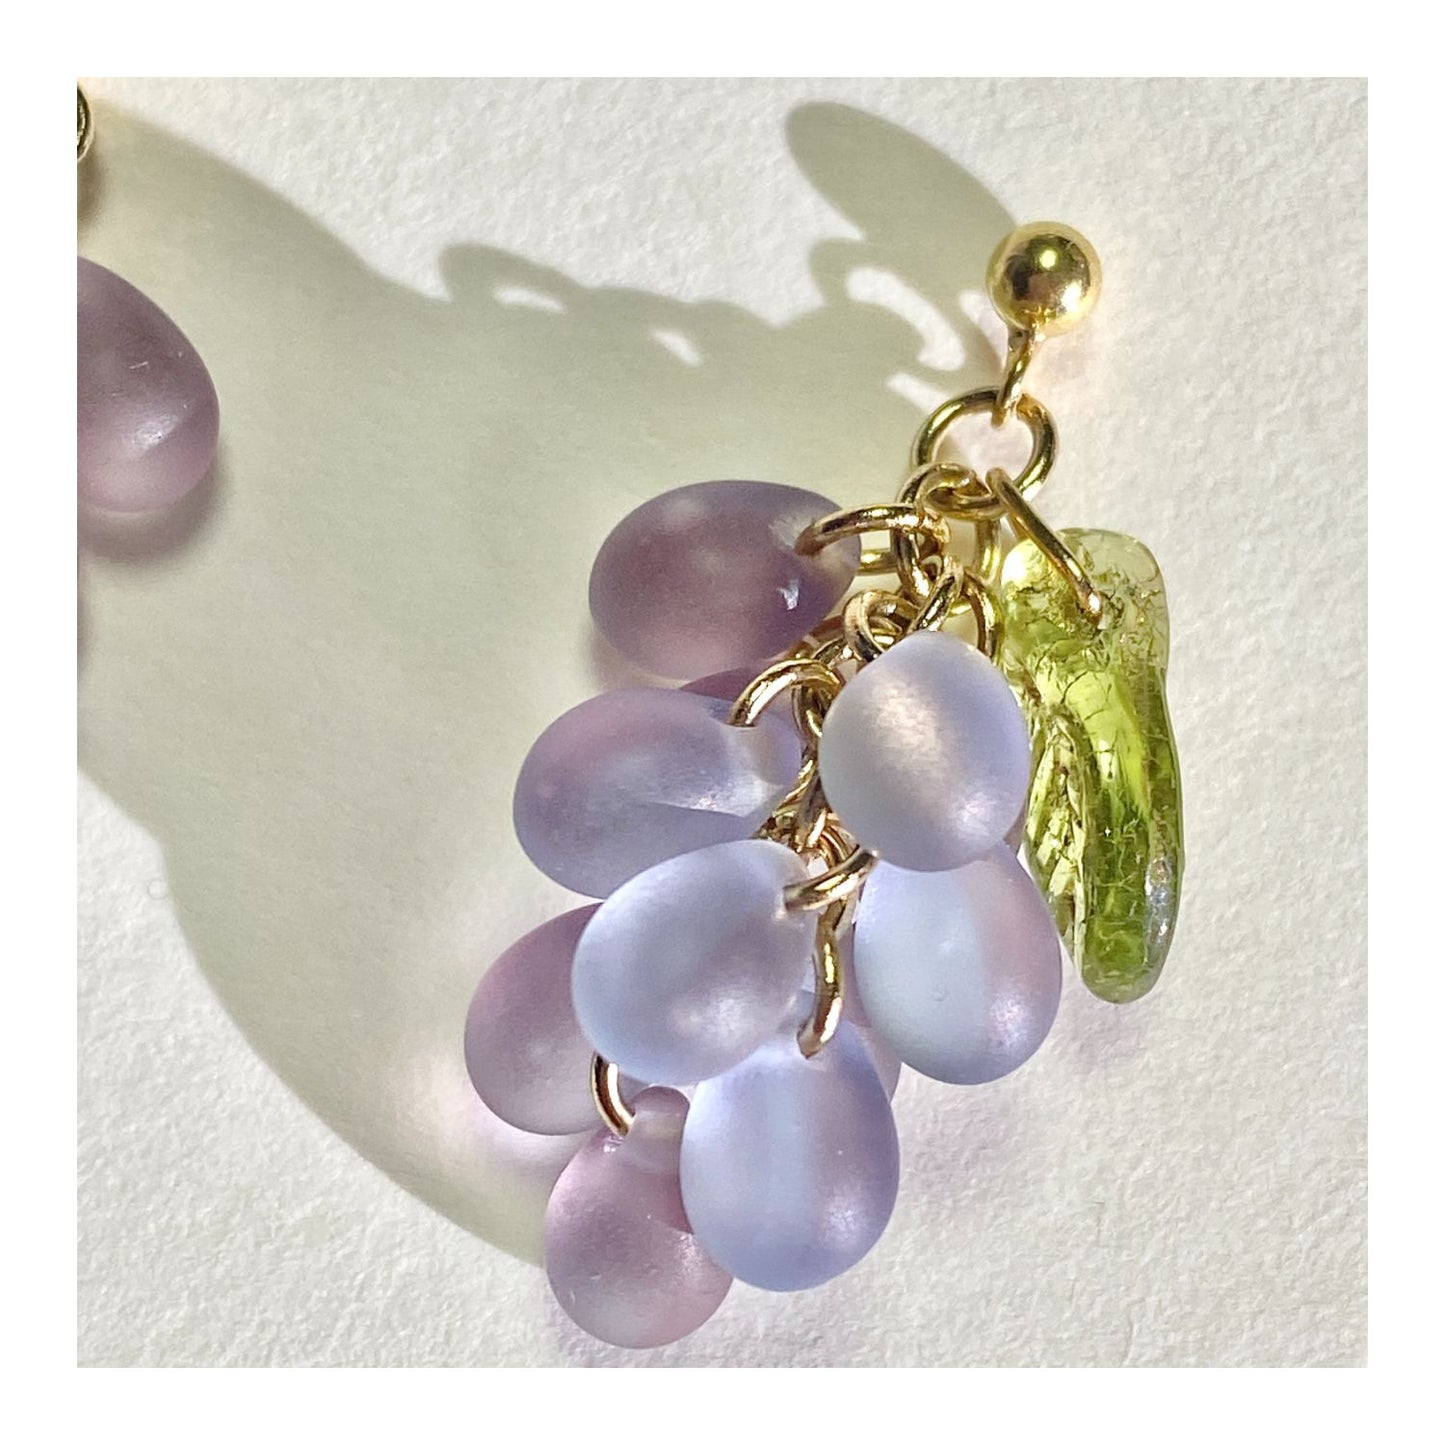 Cute Grape Earrings, Fruit Earrings | Grape Earrings, Food Earrings, Cute Fruit Earrings, Colorful Earrings, Gifts for Her